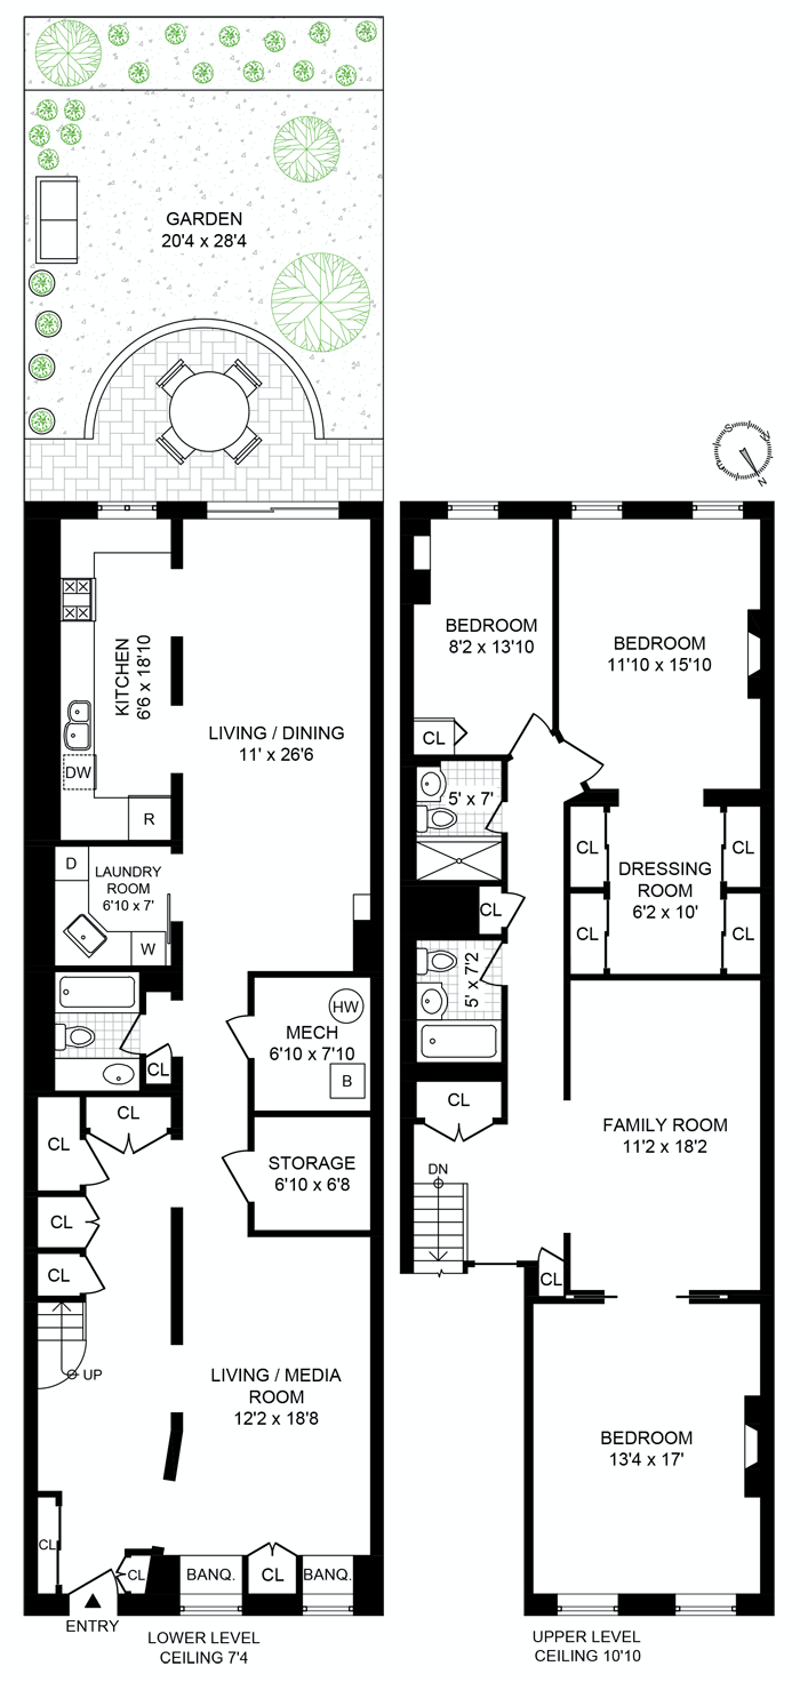 Floorplan for 130 Berkeley Place, 1